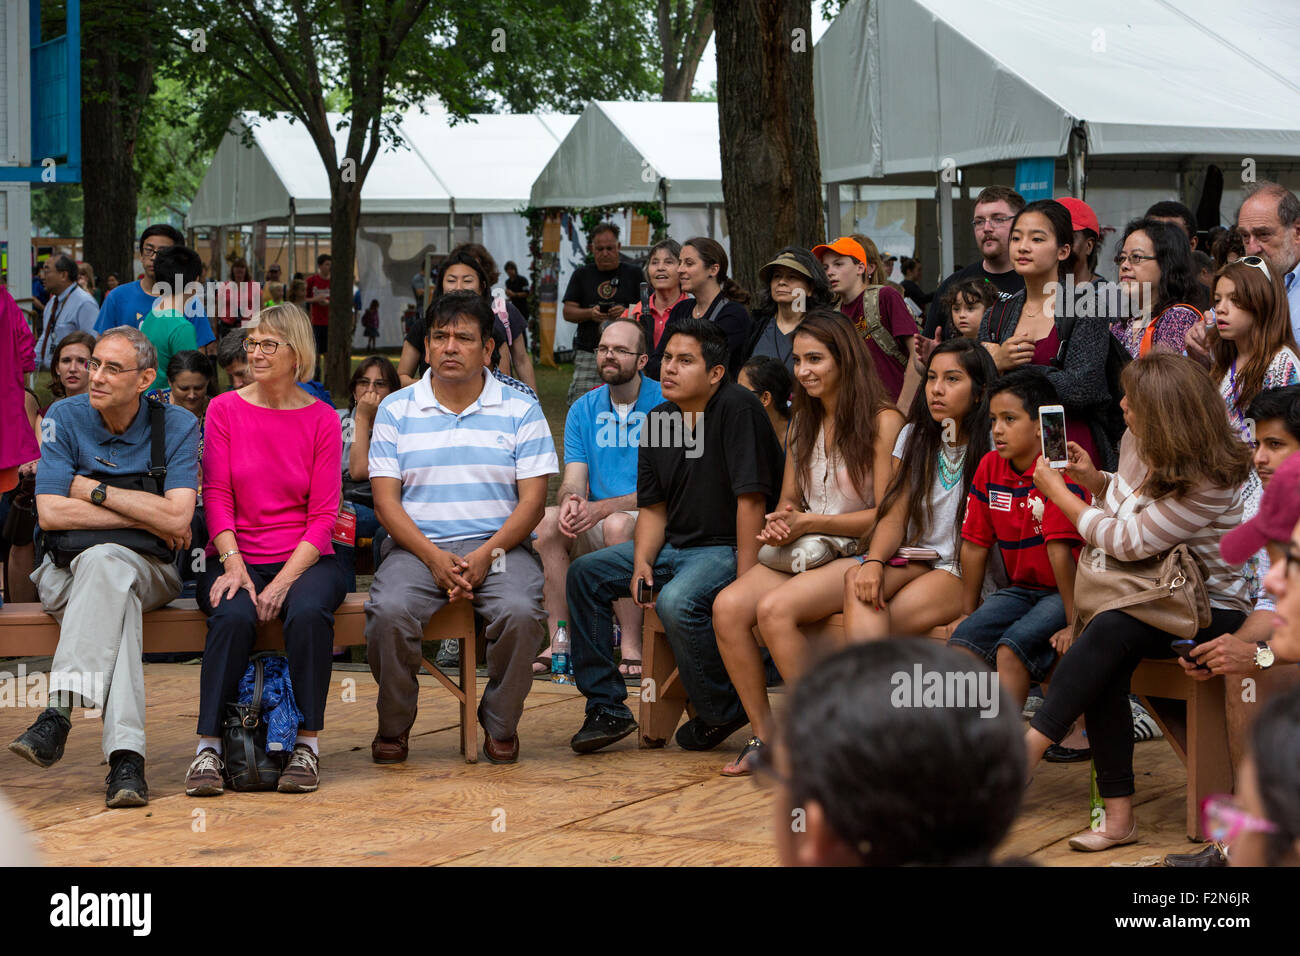 Spectators Watching Dancers at the Peru Folklife Festival, Washington, D.C., July 2015. Stock Photo